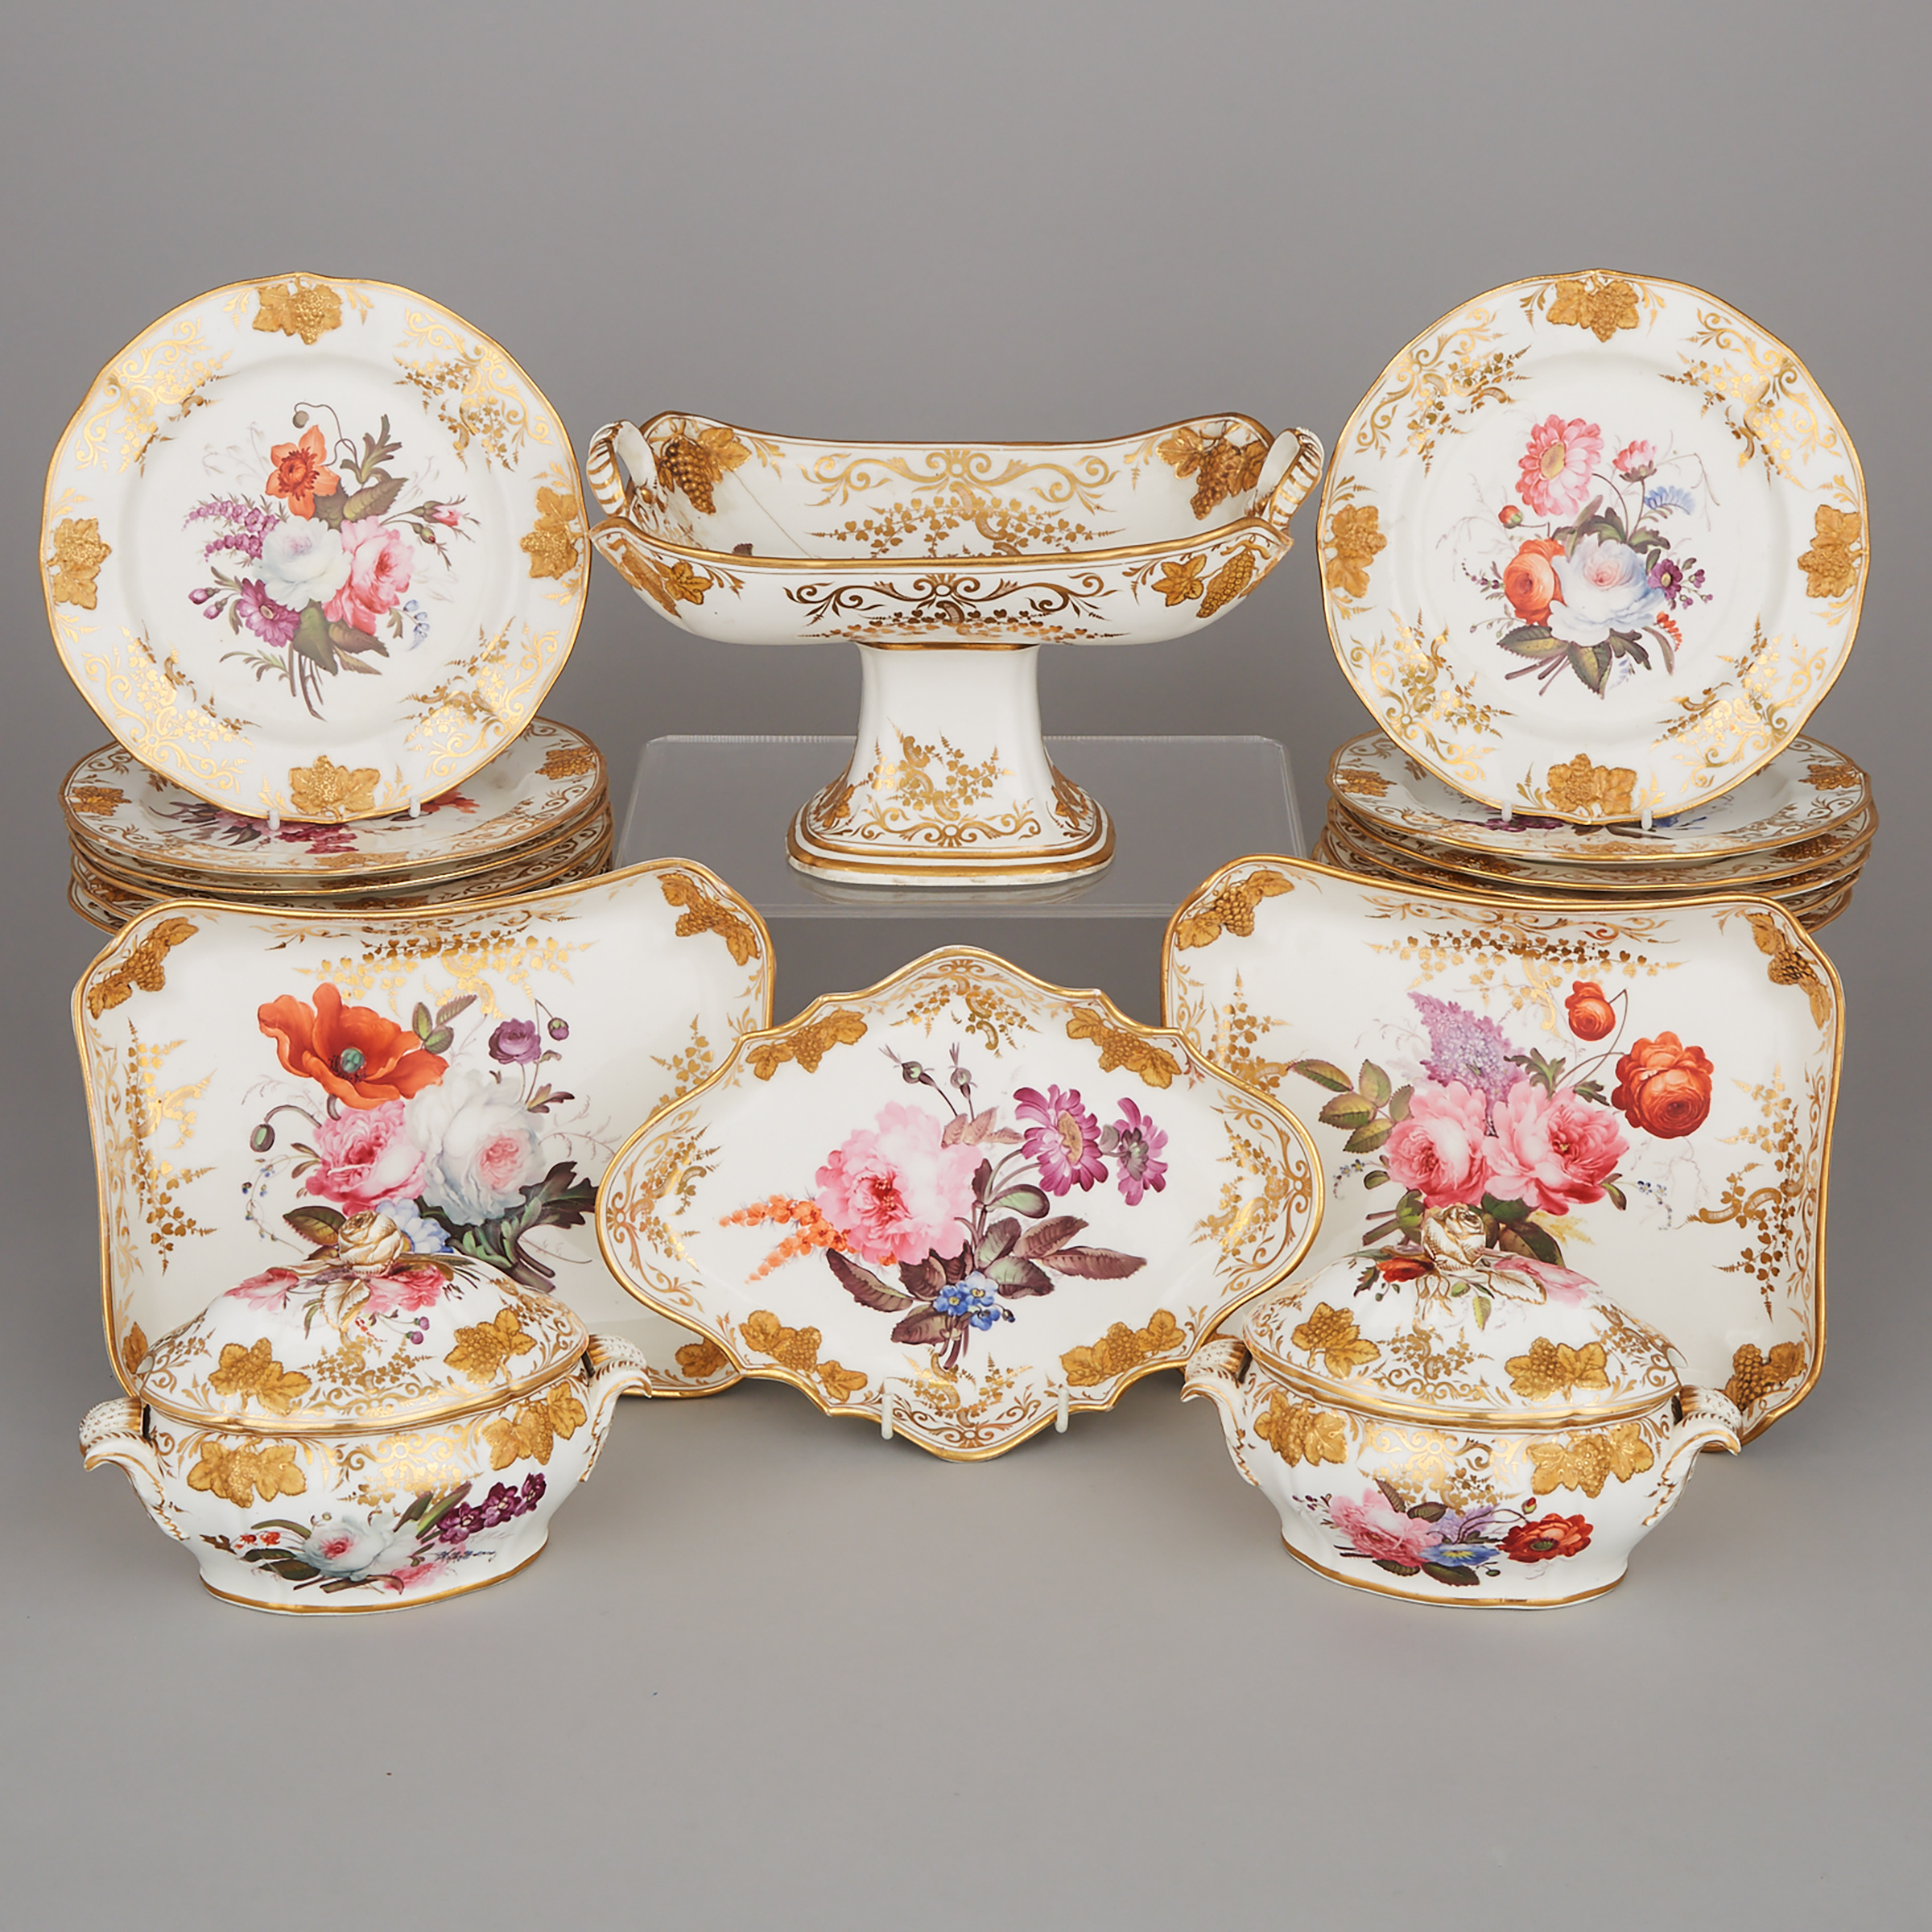 English Porcelain Dessert Service, probably Coalport, c.1820-25